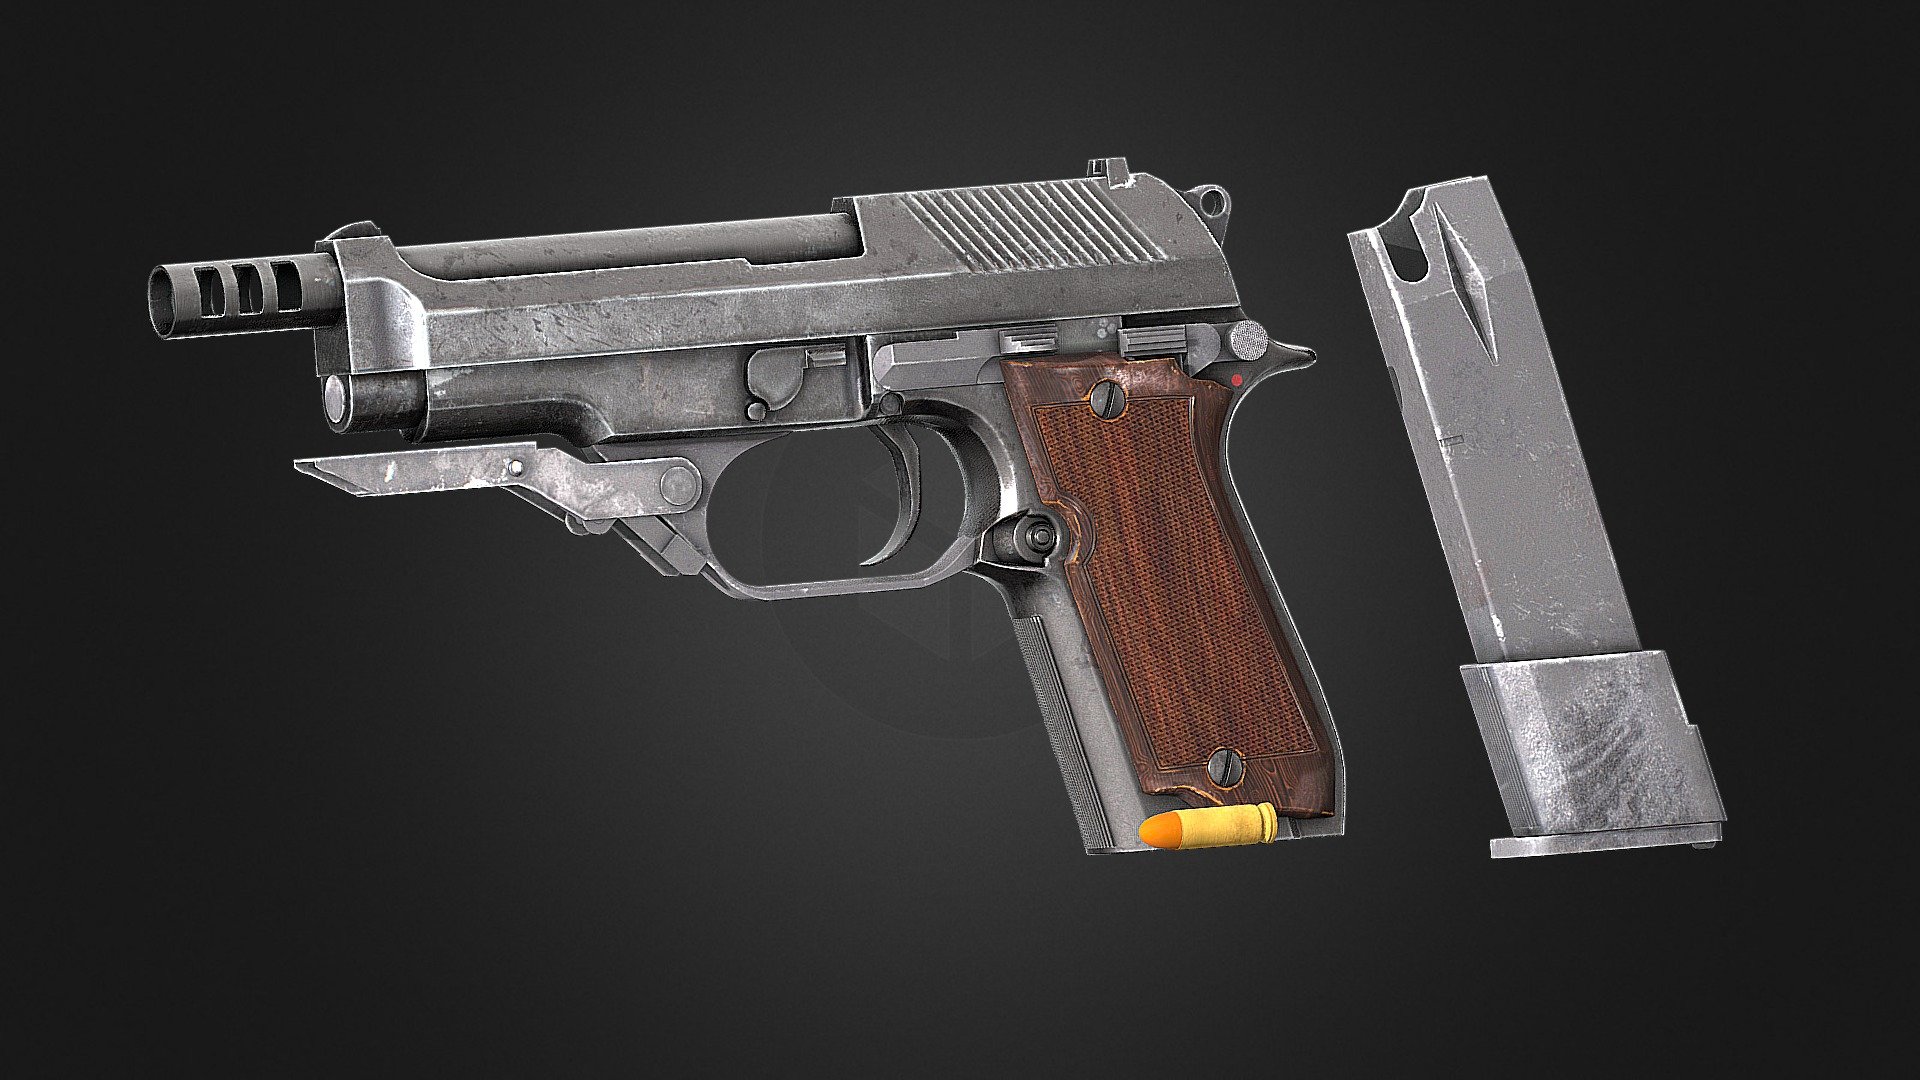 Beretta M93R - Fully Automatic Pistol.

Modelled &amp; Textured - Gun- Pistol-Beretta M93R - 3D model by Ares Studio (@aresstudio) 3d model